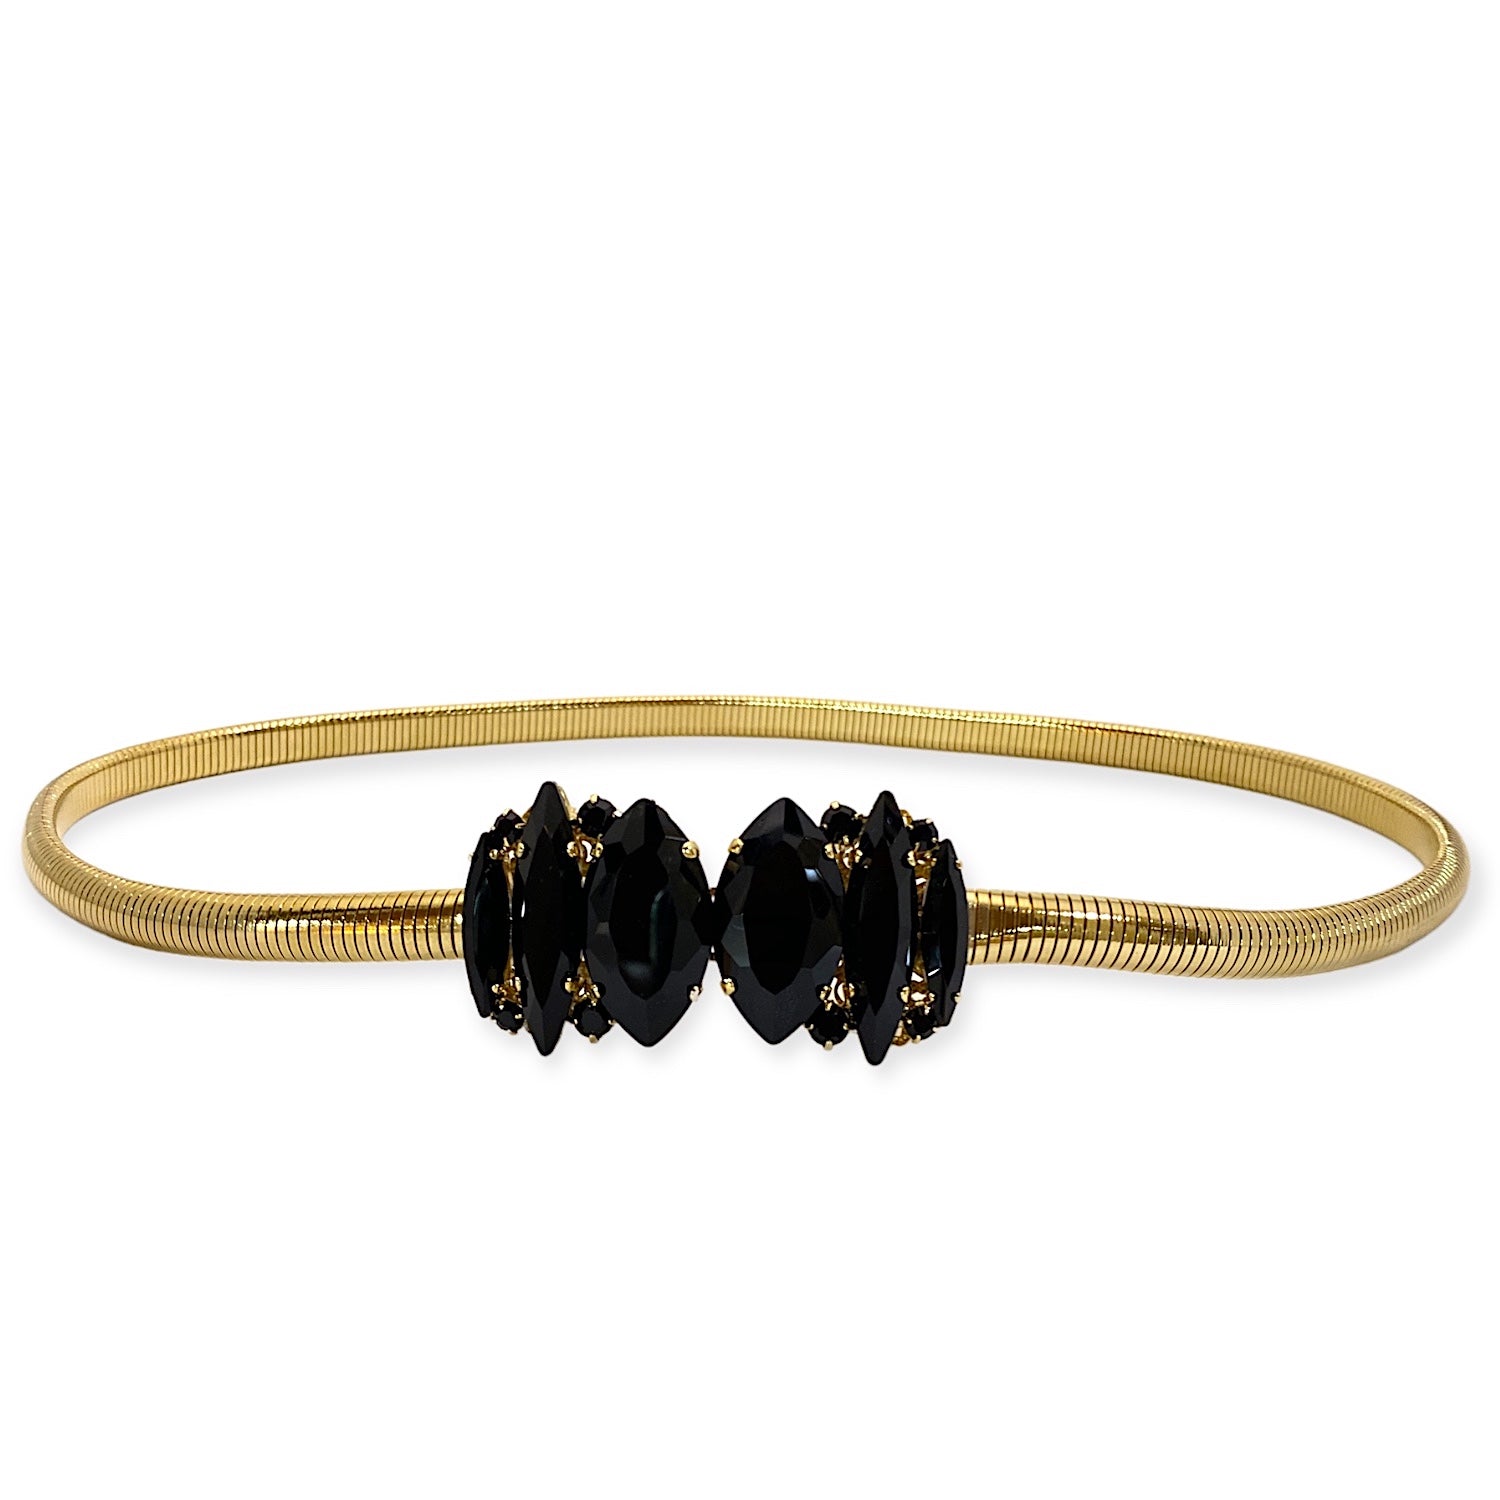 Matilde belt with jewel buckle in black crystals